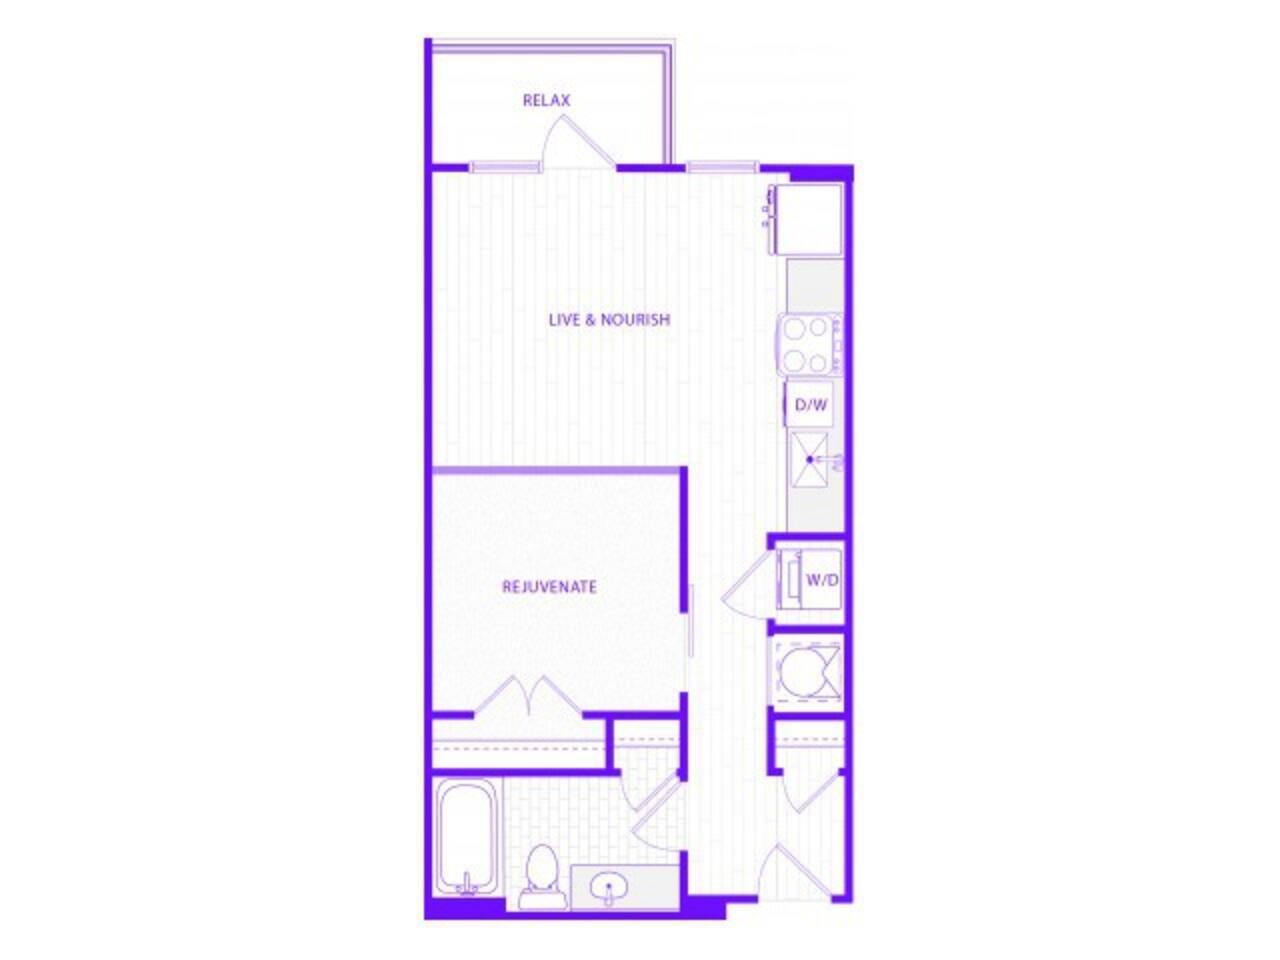 Floorplan diagram for Studio One Bath (623 SF), showing Studio